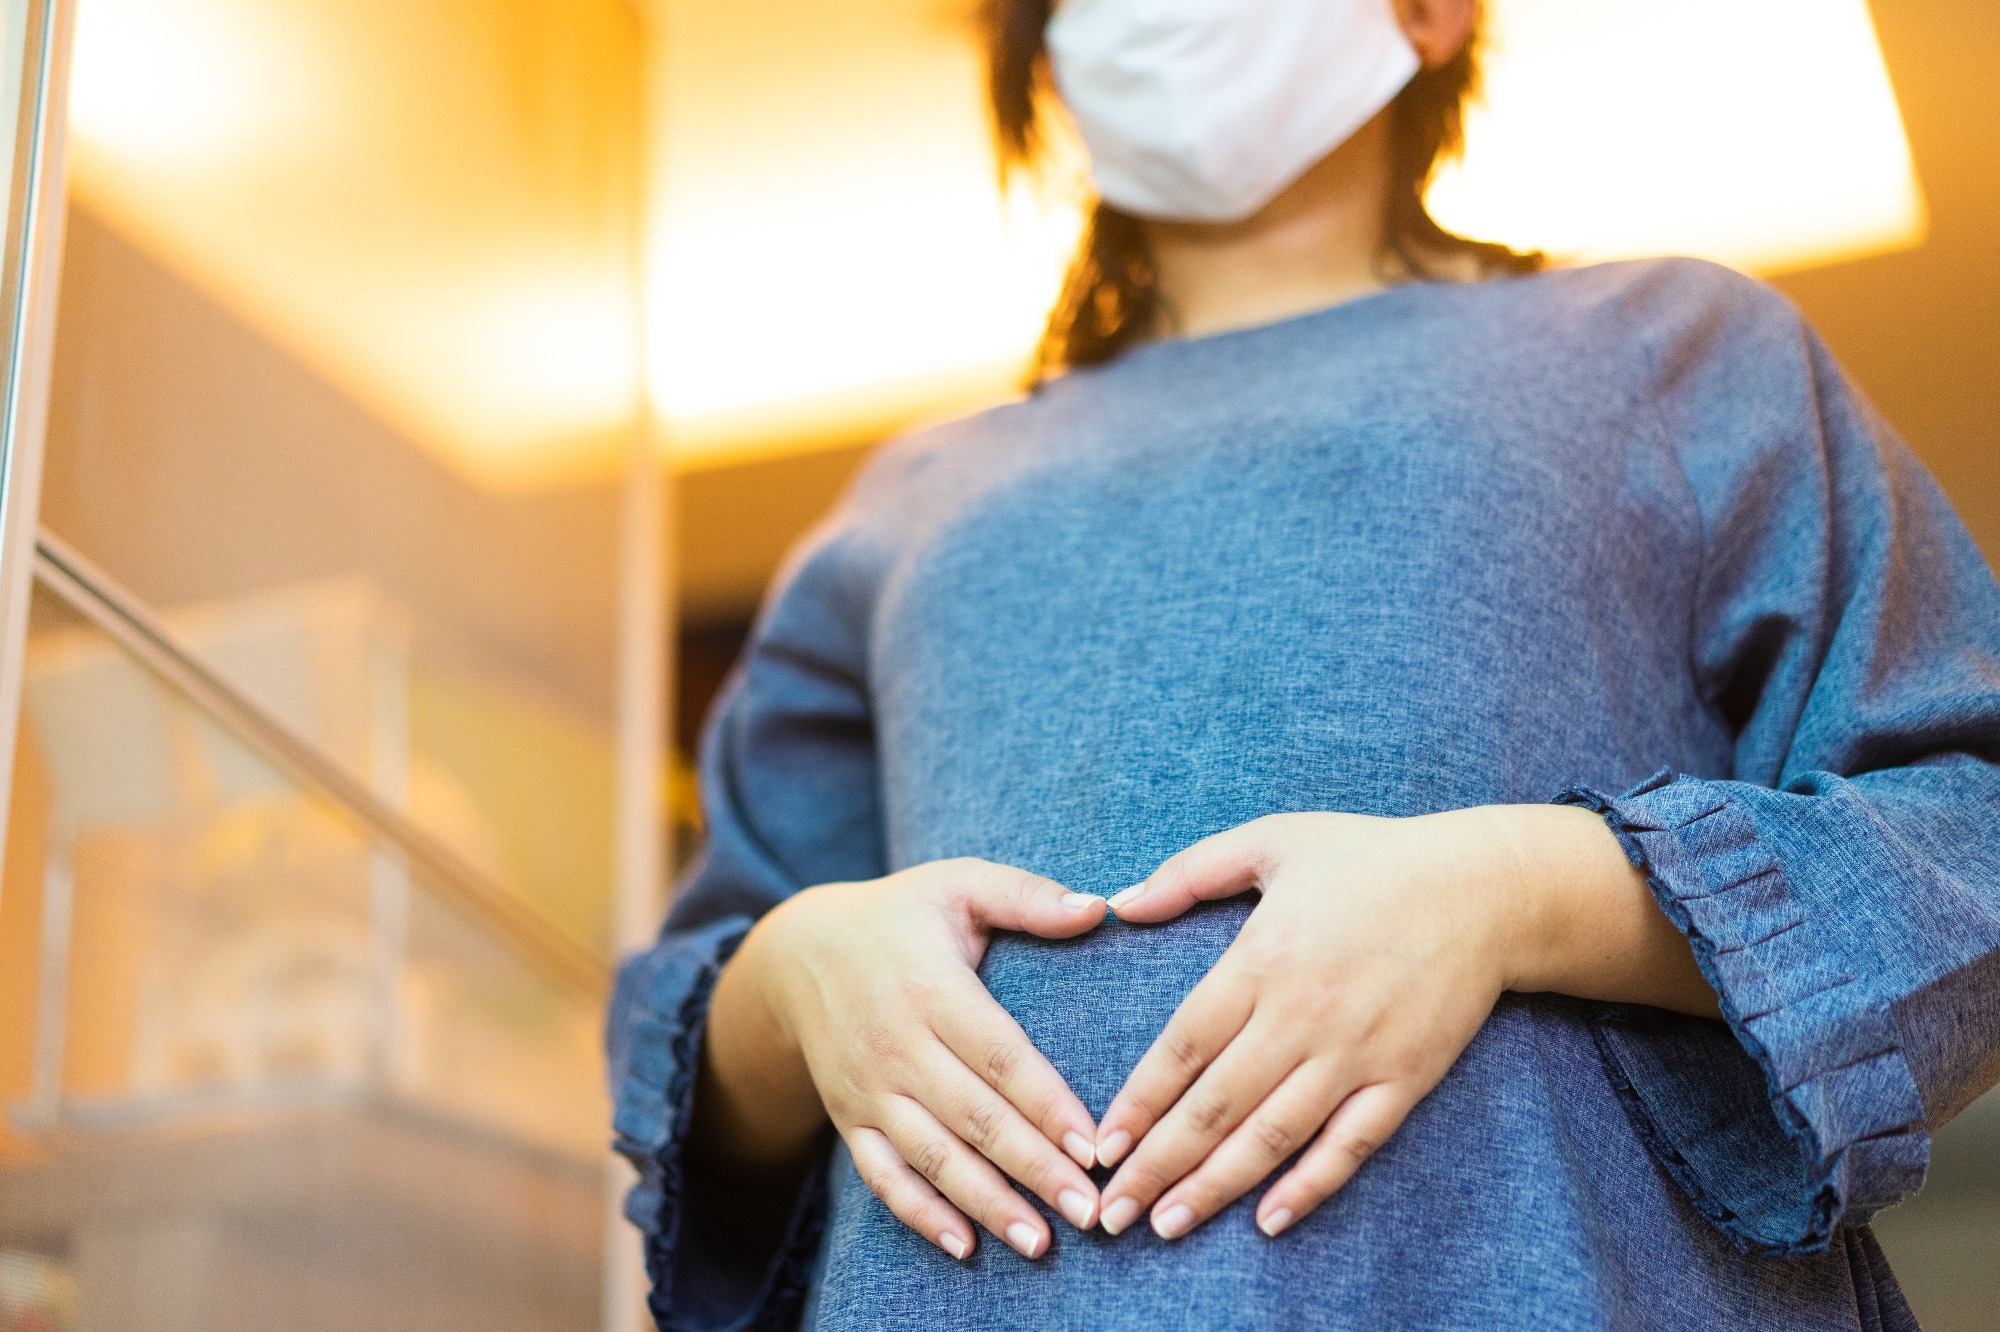 Study: Examining the impact of trimester of diagnosis on COVID-19 disease progression in pregnancy. Image Credit: MIA Studio / Shutterstock